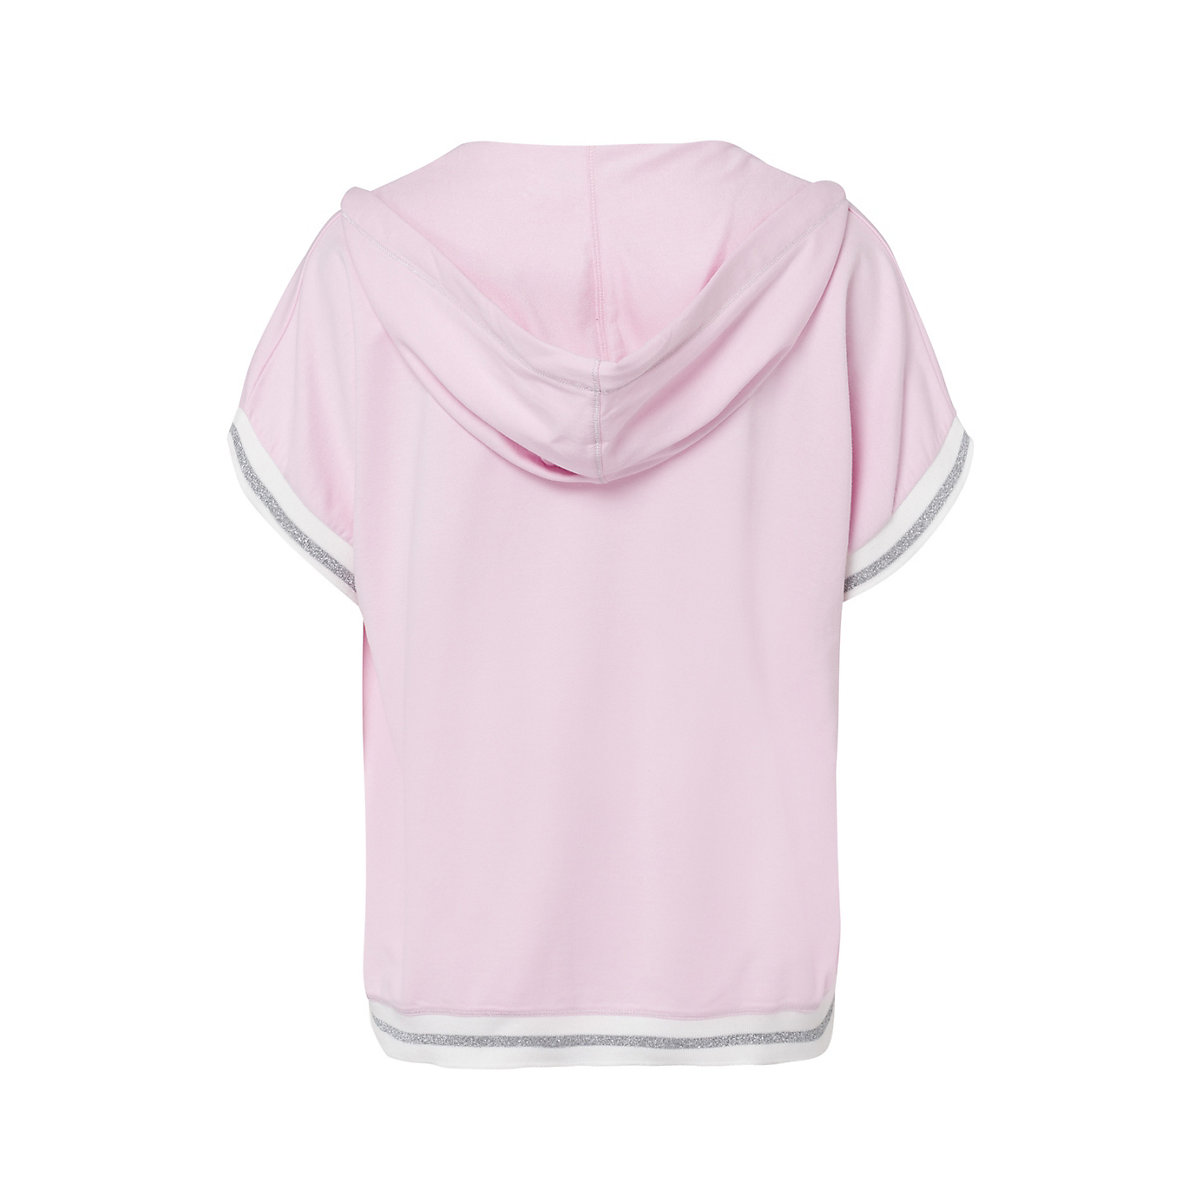 TUZZI Shirt Kimonoärmel T-Shirts rosa